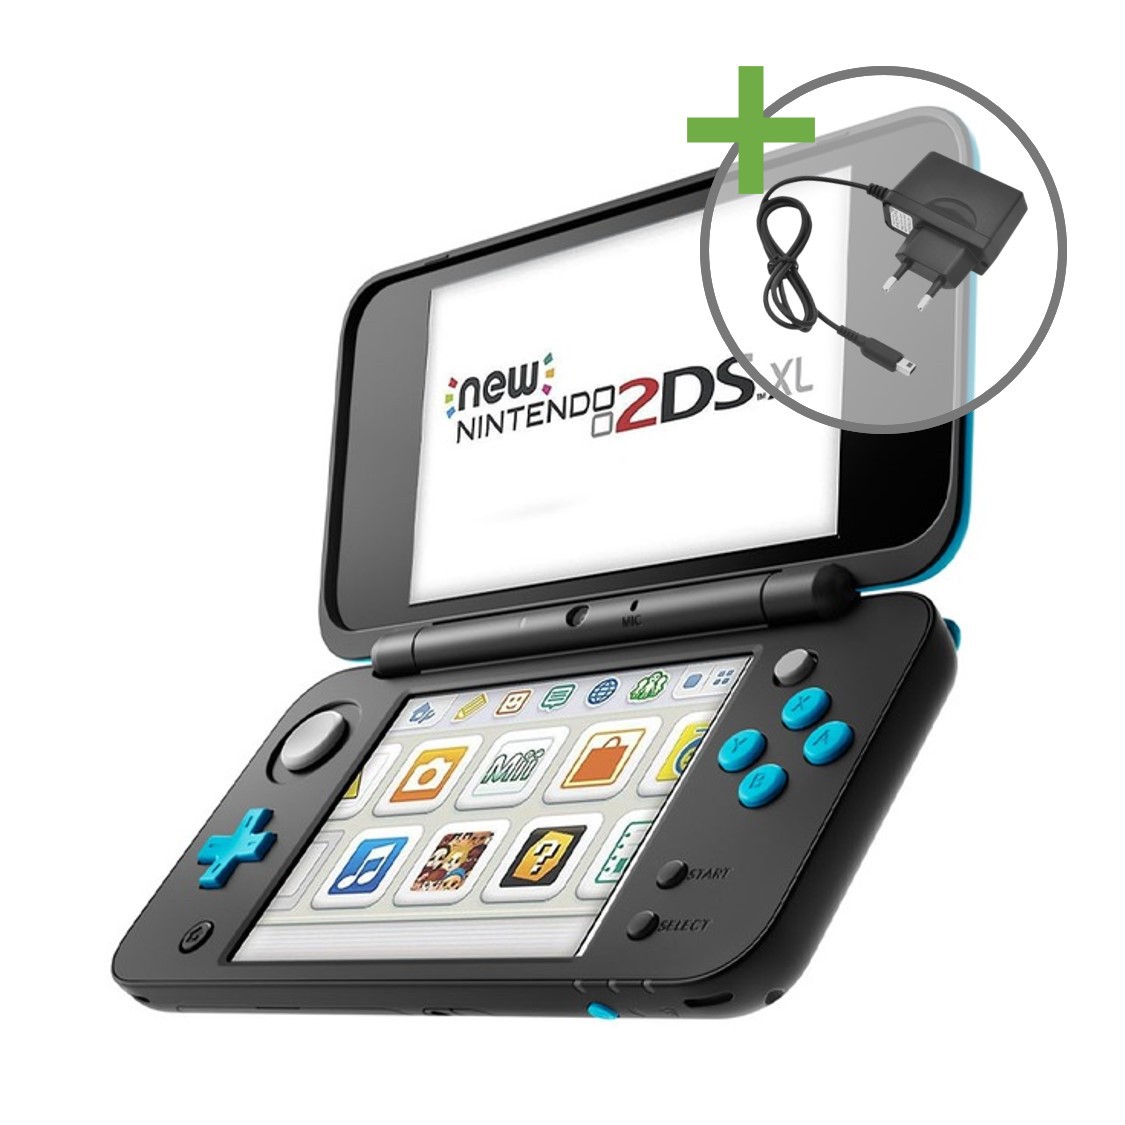 New Nintendo 2DS XL - Black/Turquoise - Nintendo 3DS Hardware